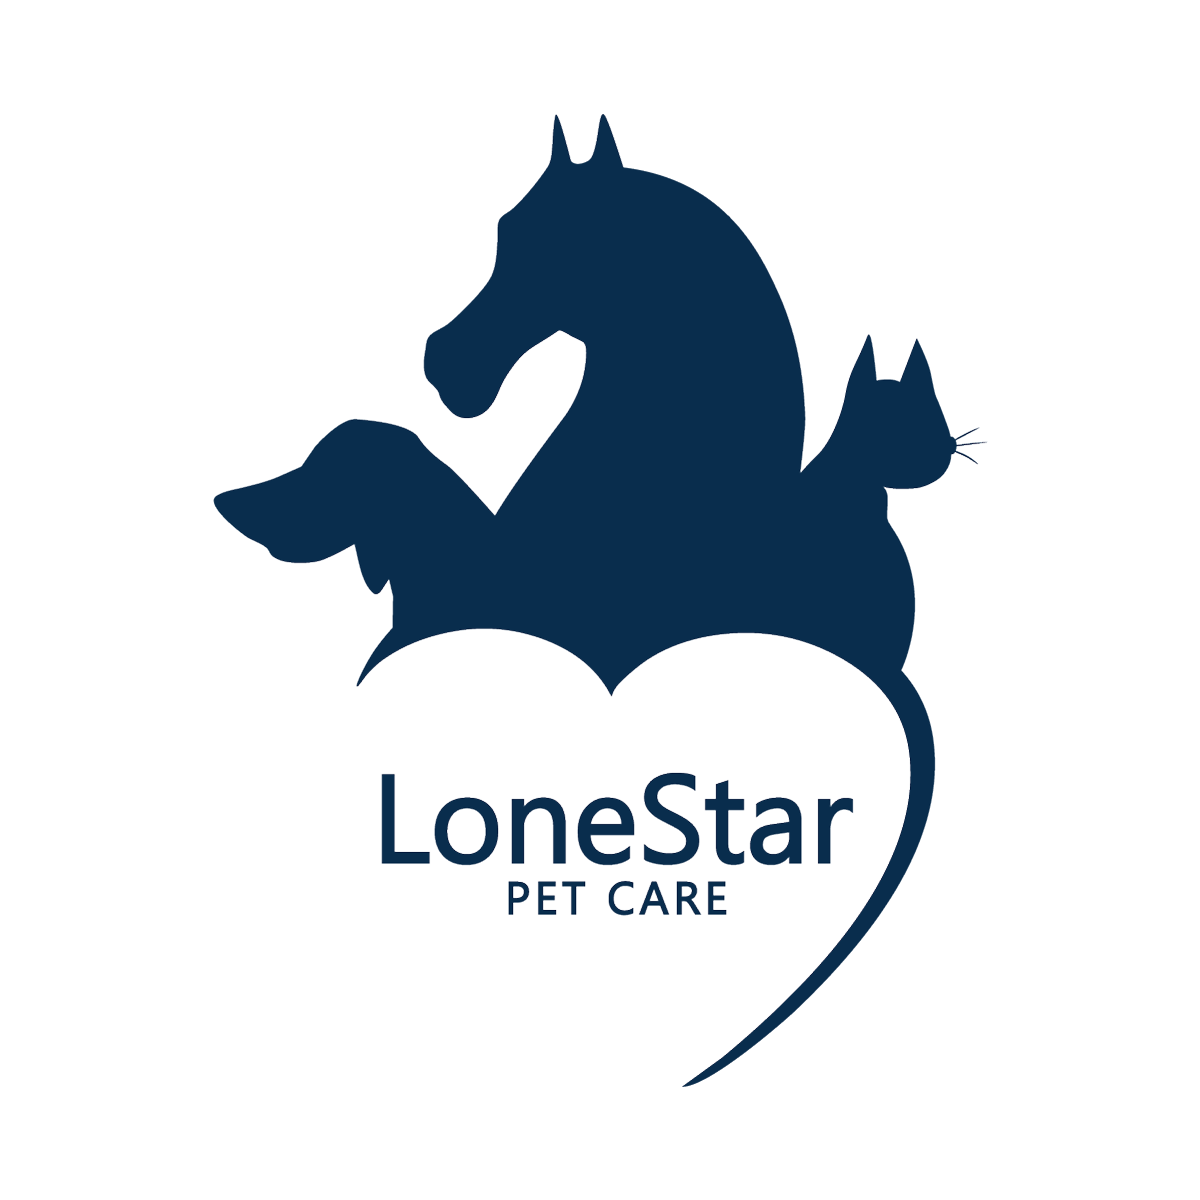 LoneStar Pet Care